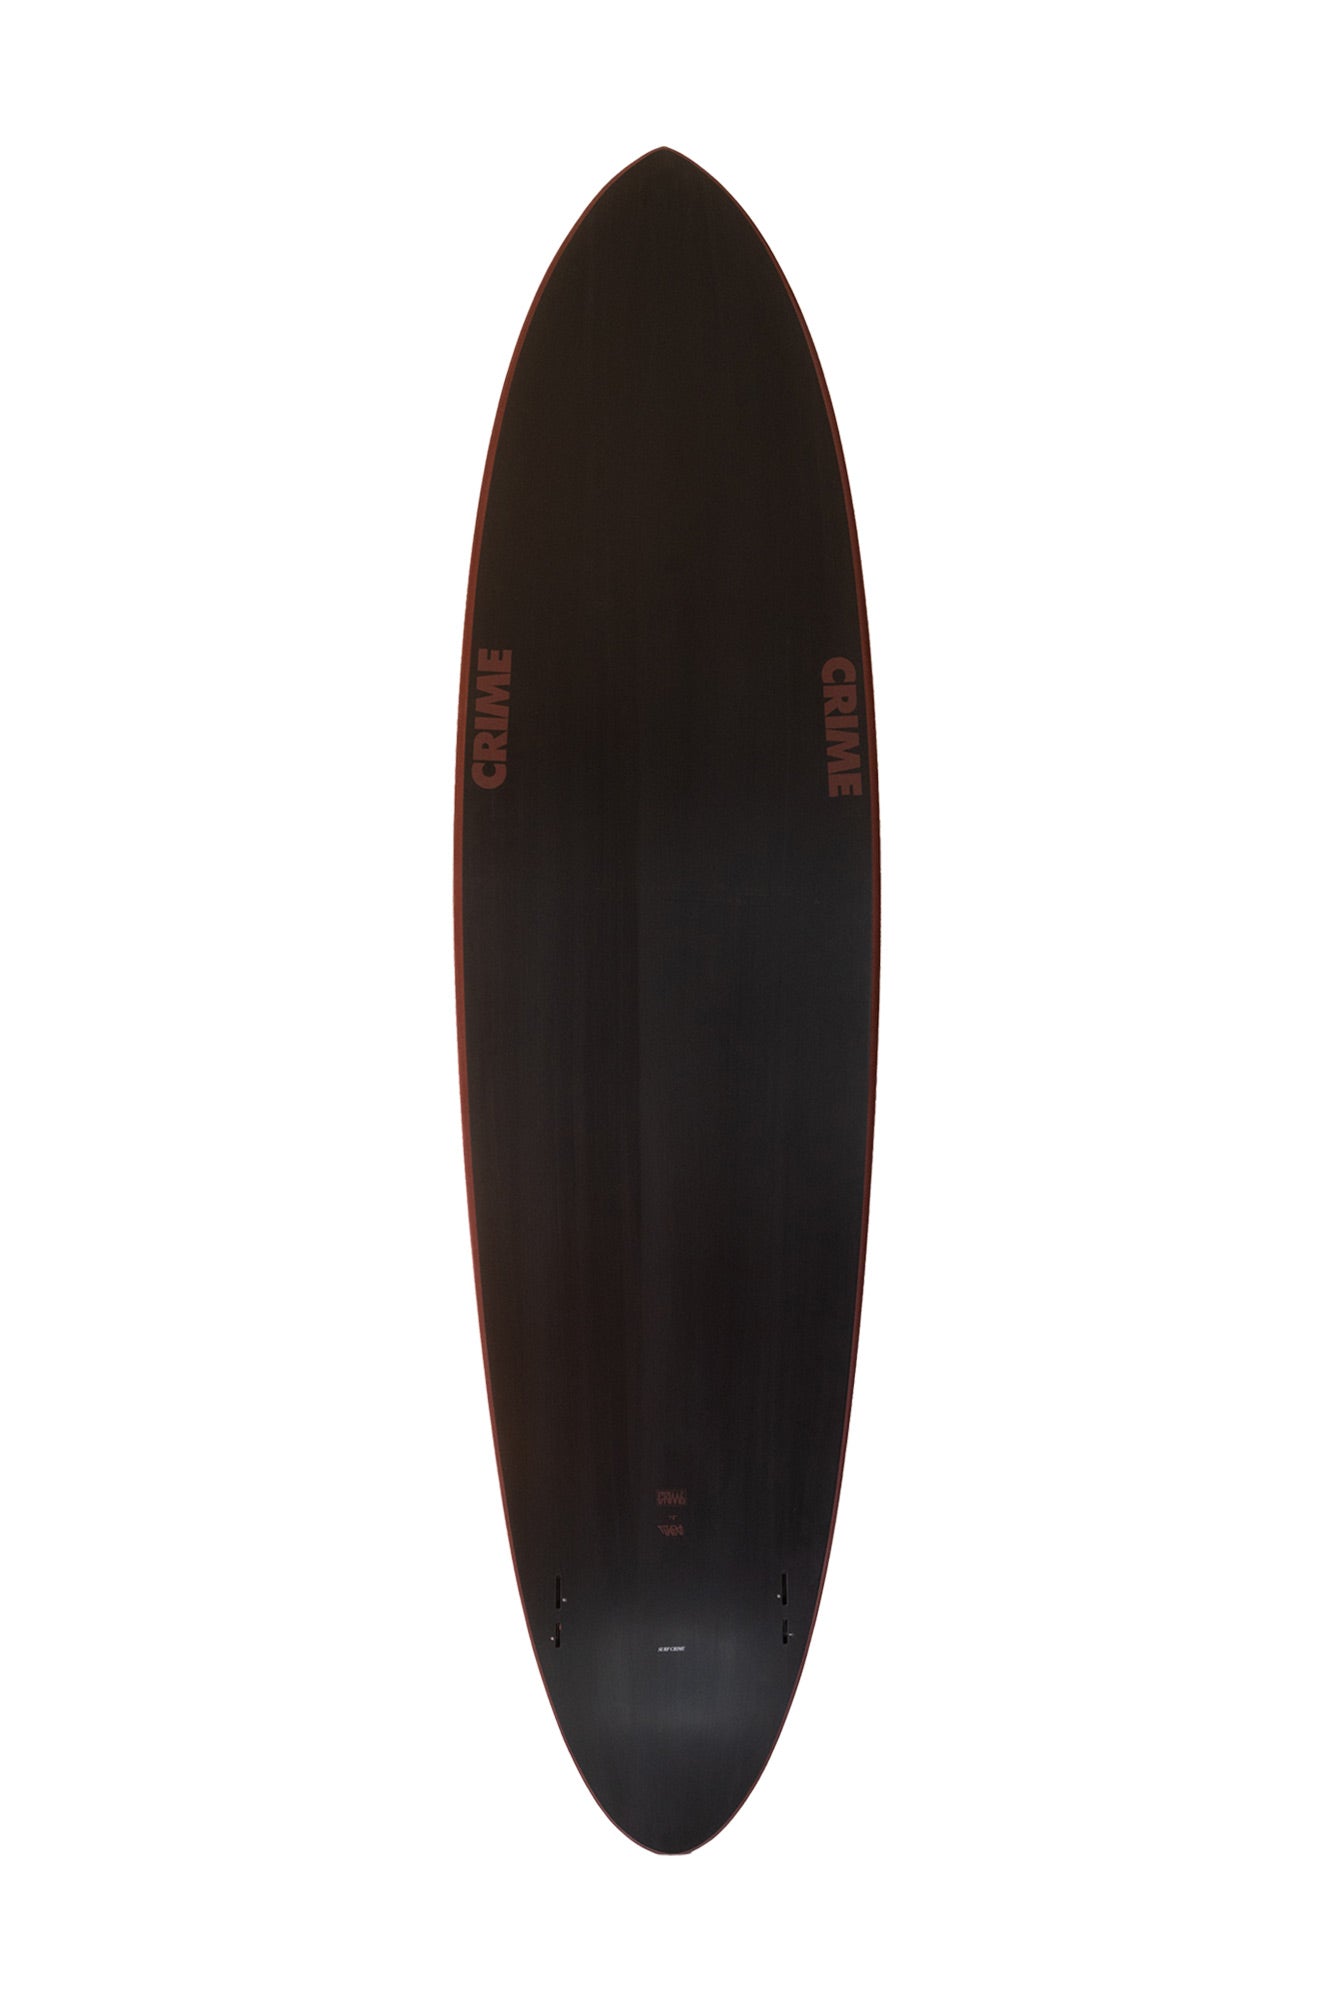 7'6 SURF CRIME CA TWIN - OXBLOOD